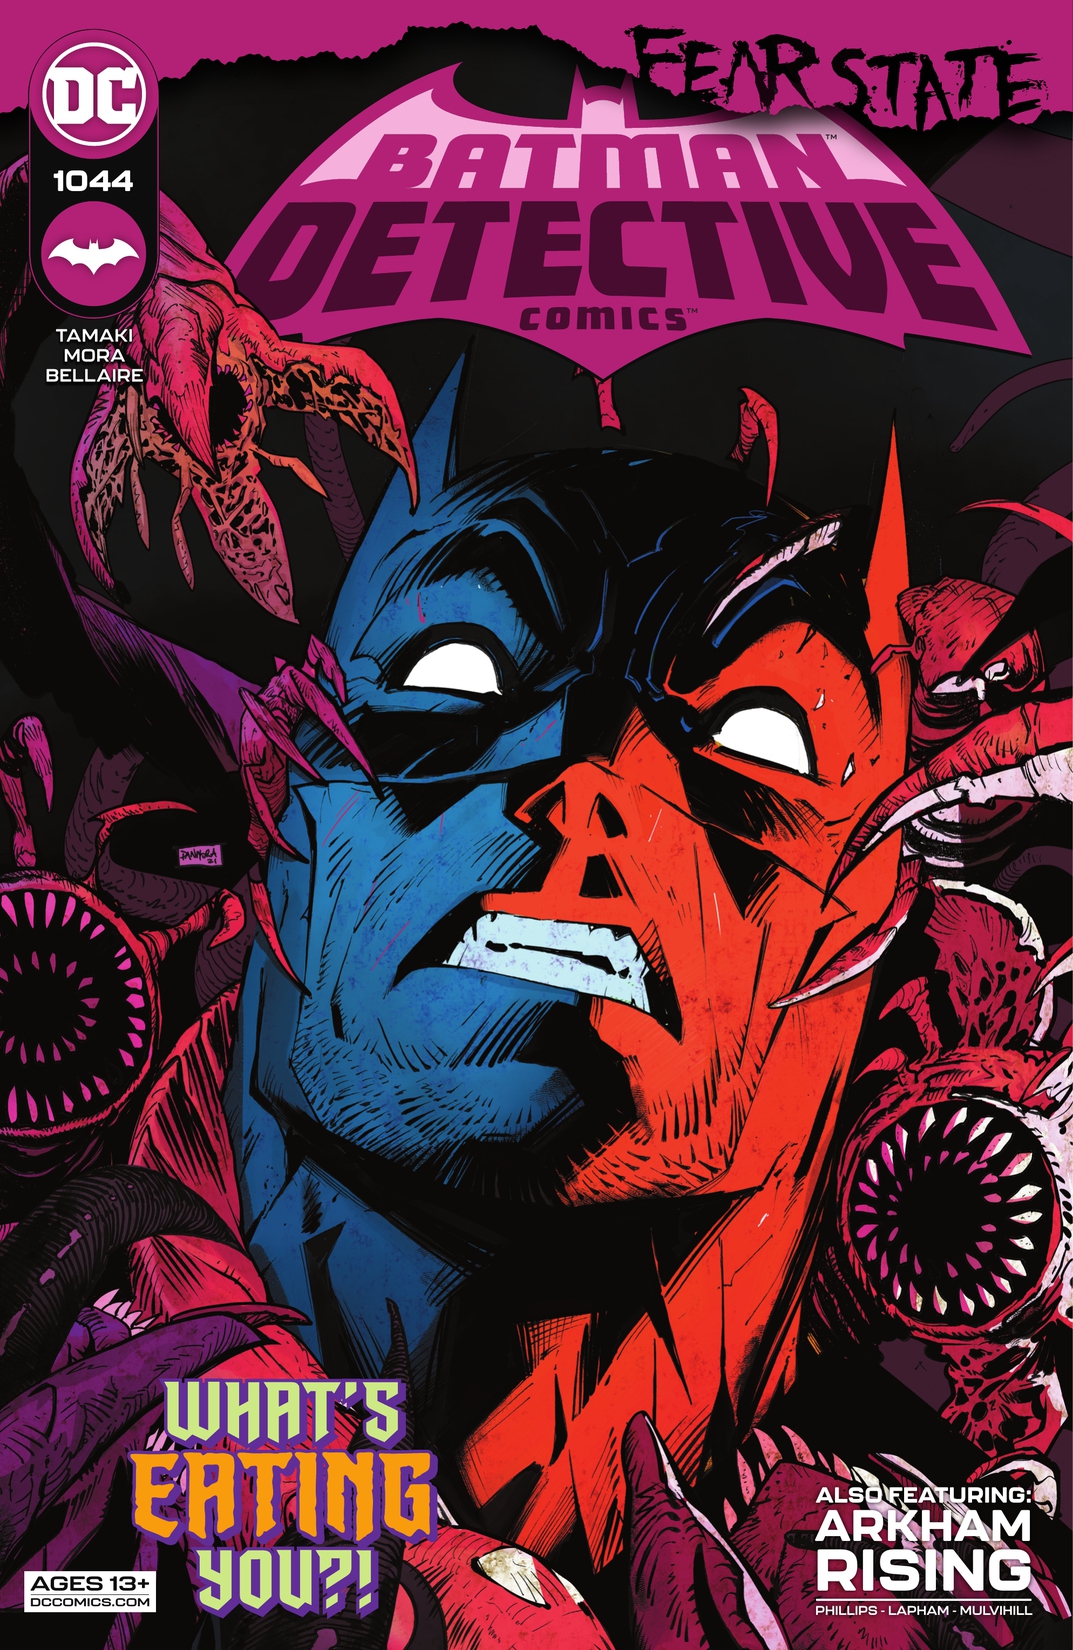 Detective Comics (2016-) #1044 preview images